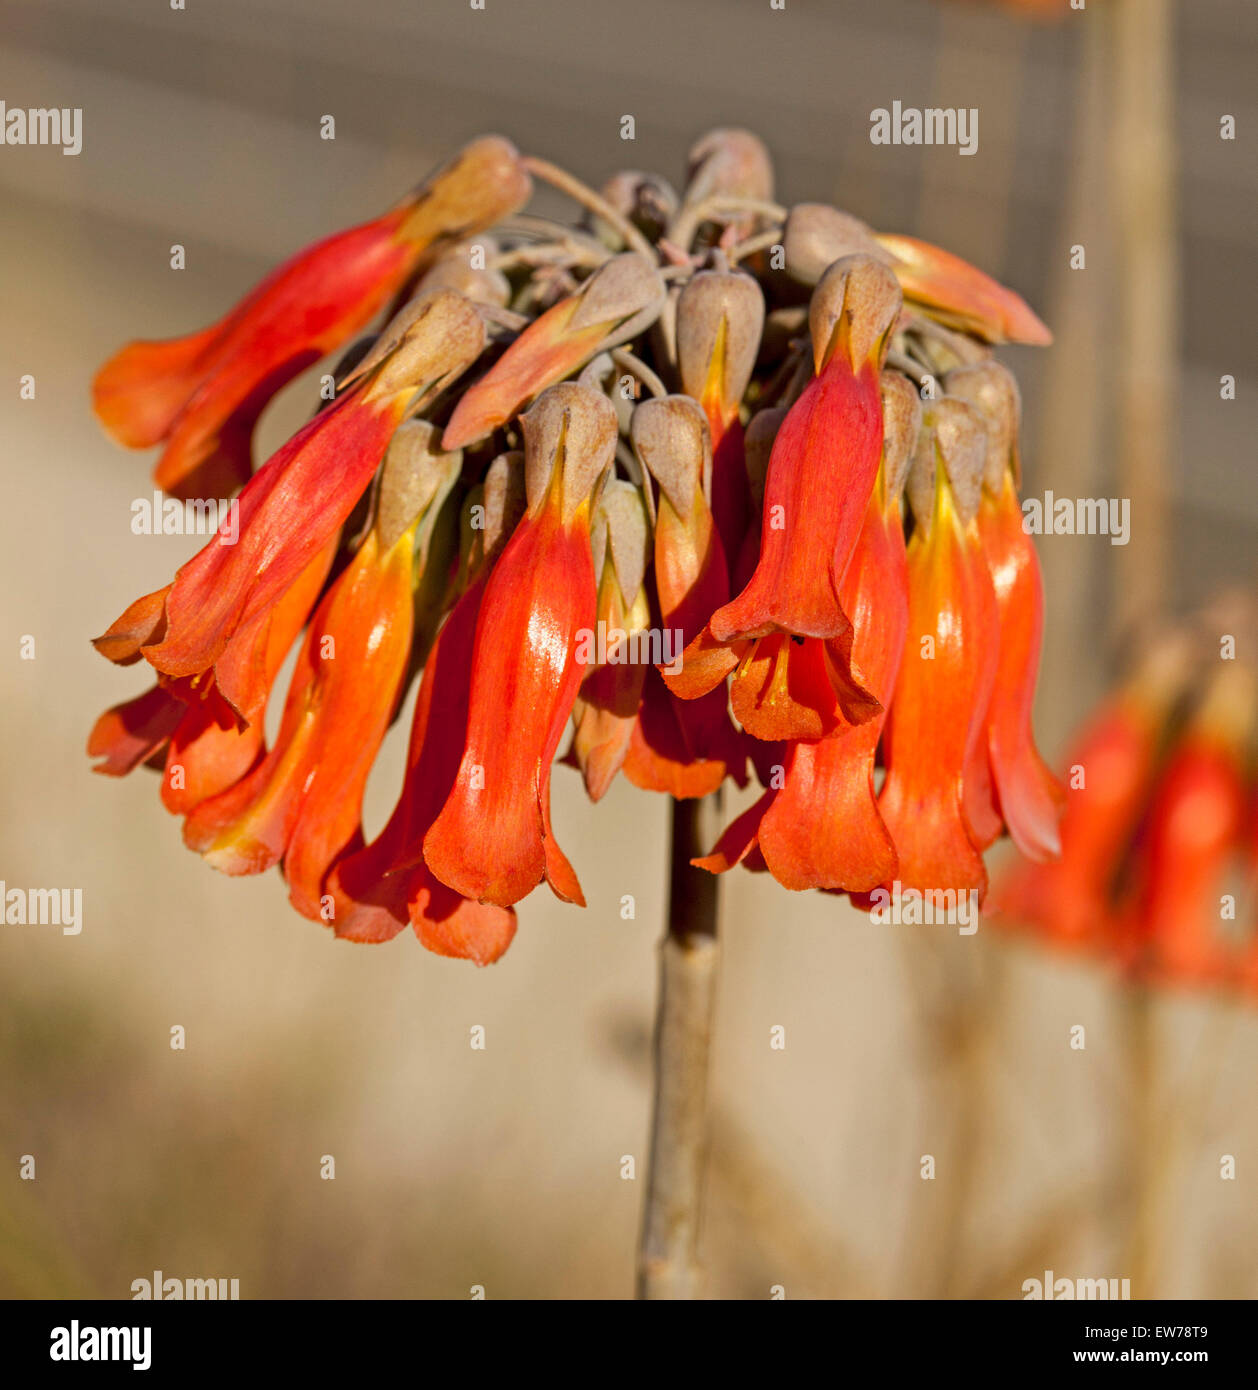 Cluster di bel rosso fiori a forma di campanella di Madre di milioni di piante succulente Bryophyllum / Kalanchoe delagoense, una specie di erbaccia in Australia Foto Stock